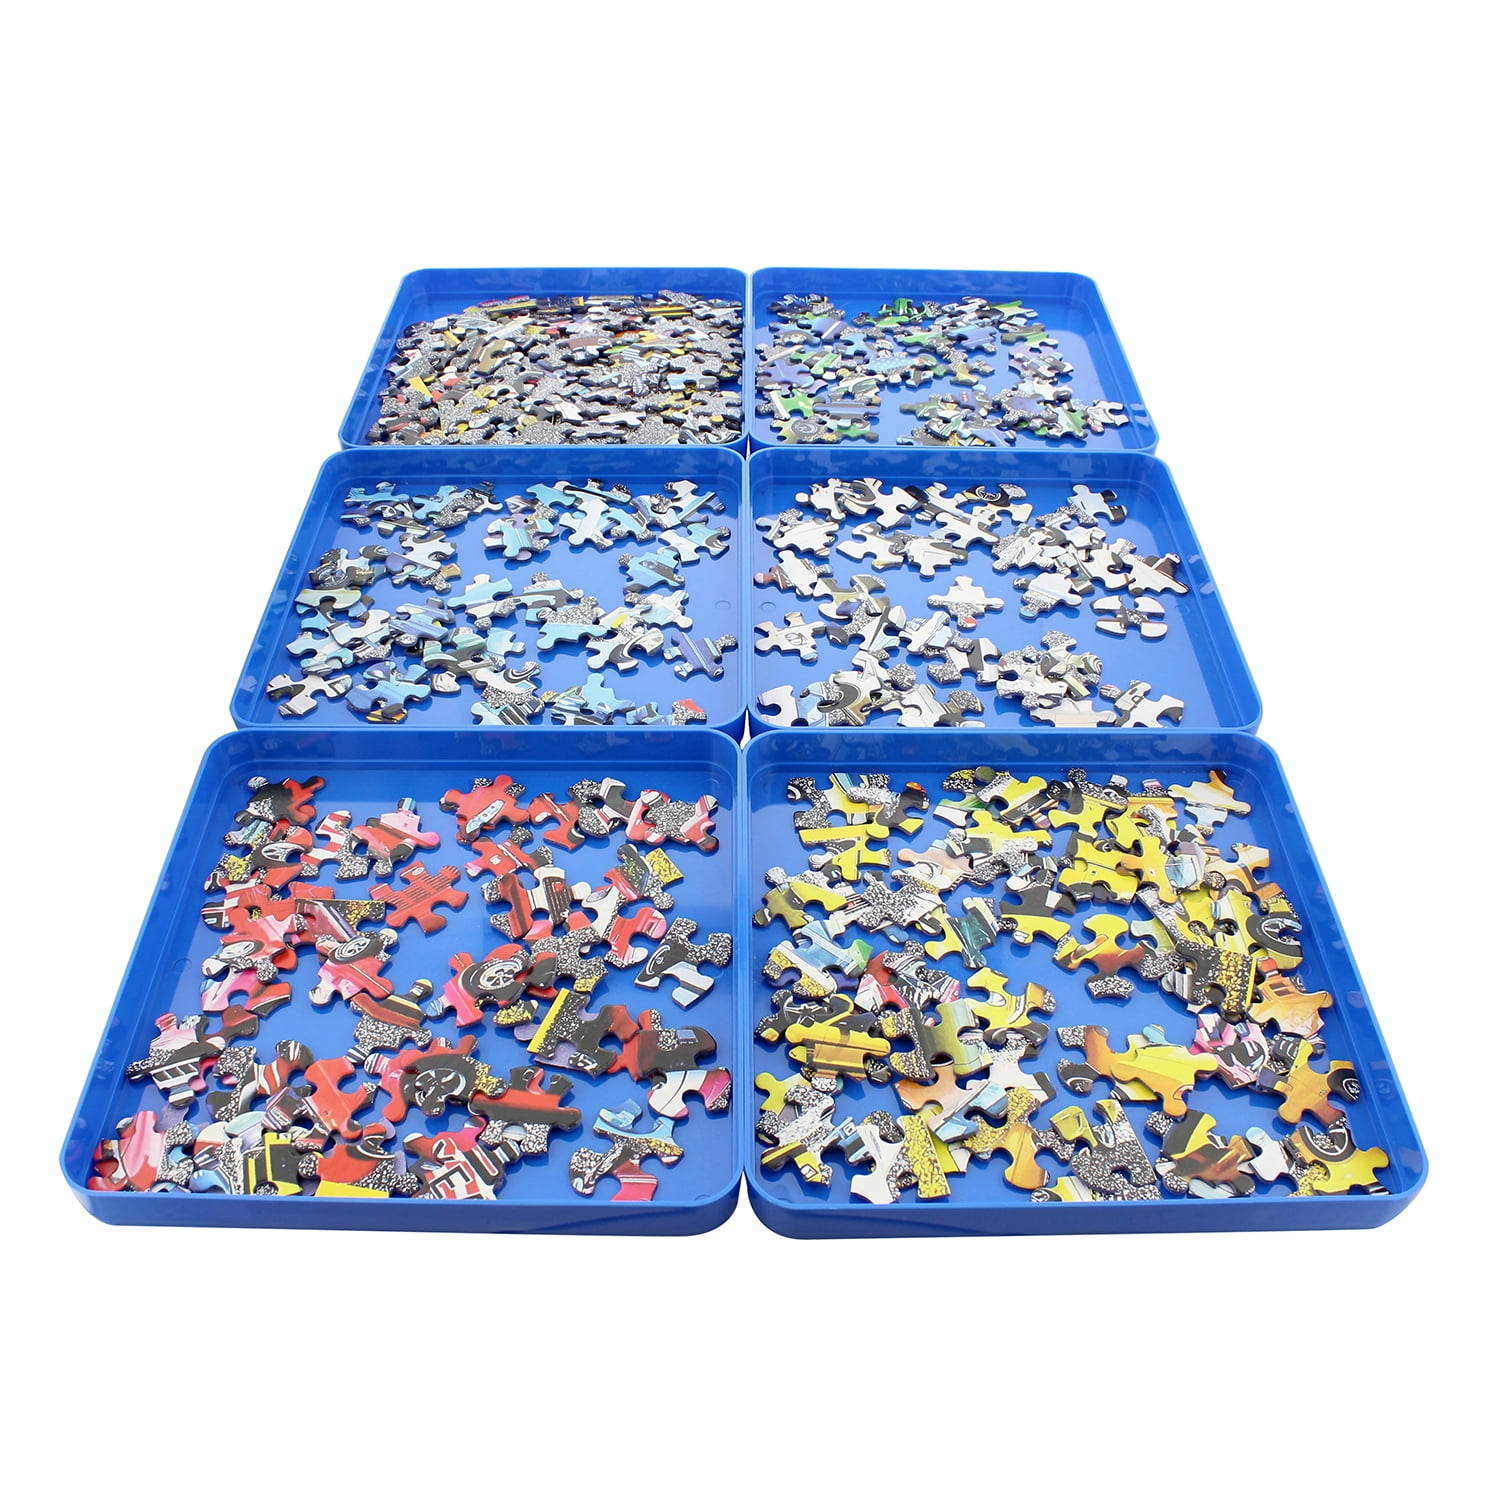 Mini Puzzle Tray (ABS) - 7″×9″